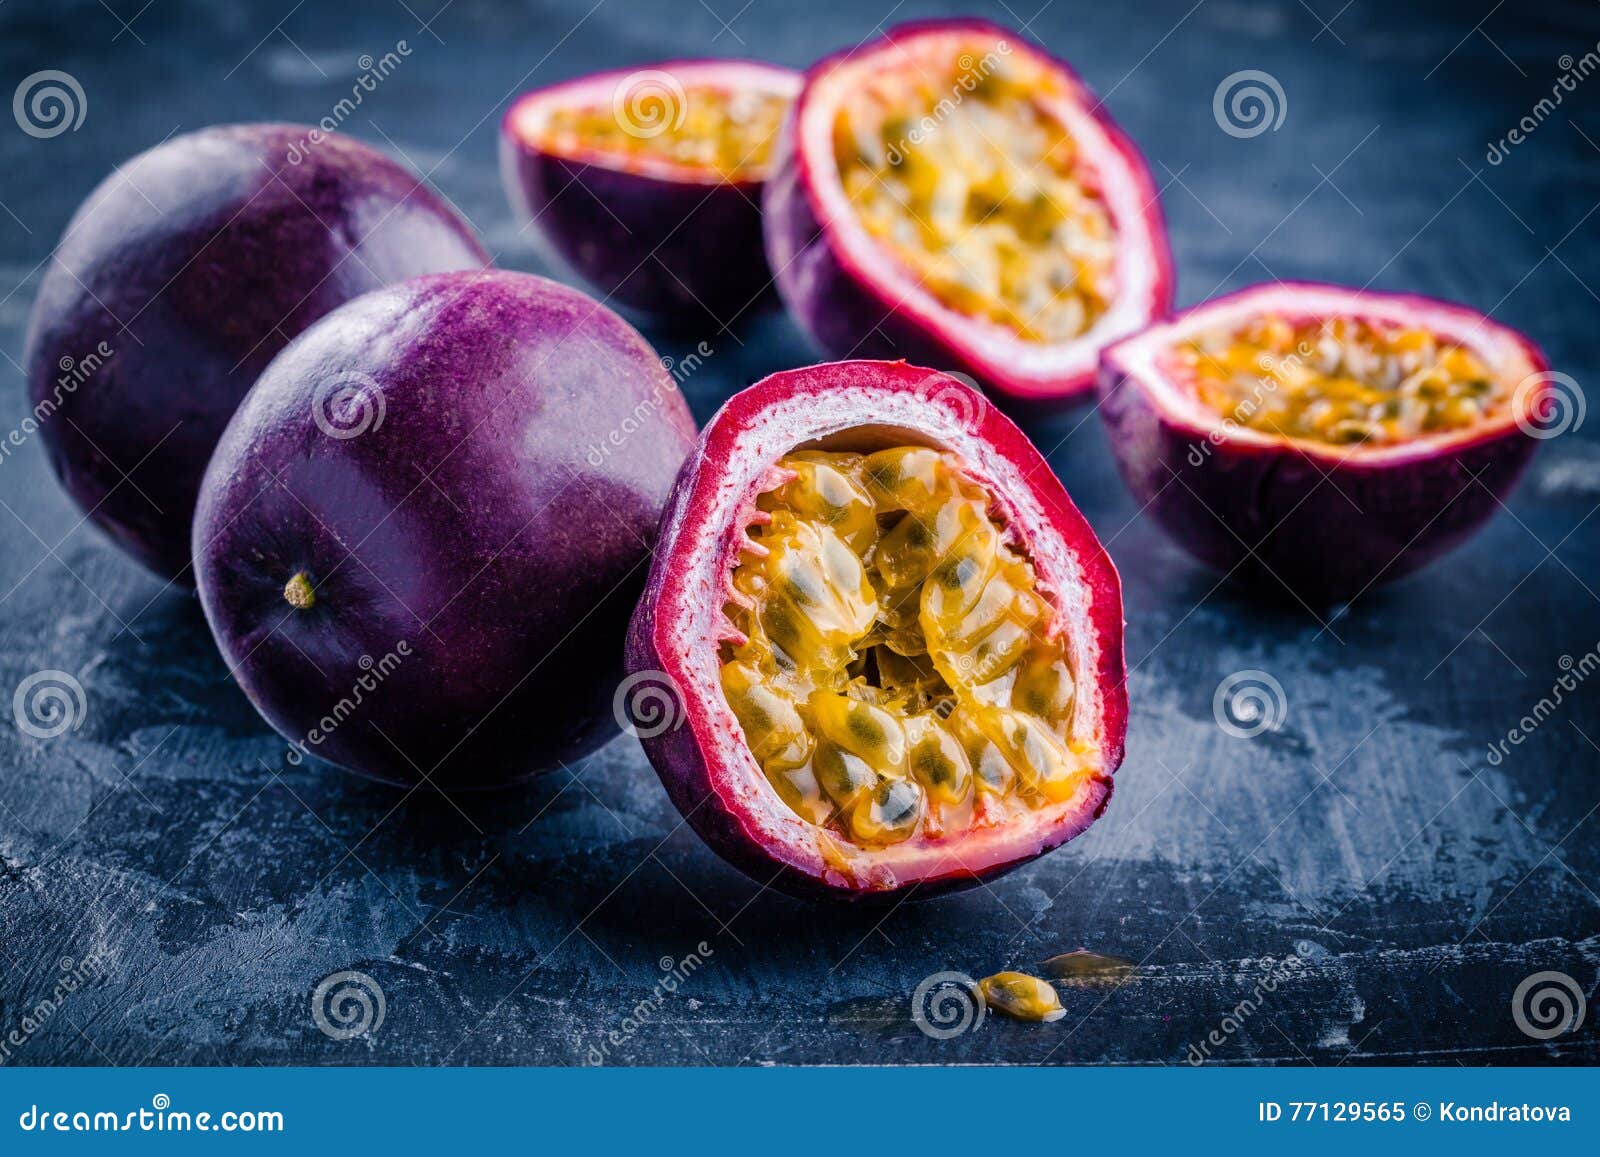 ripe organic passion fruit